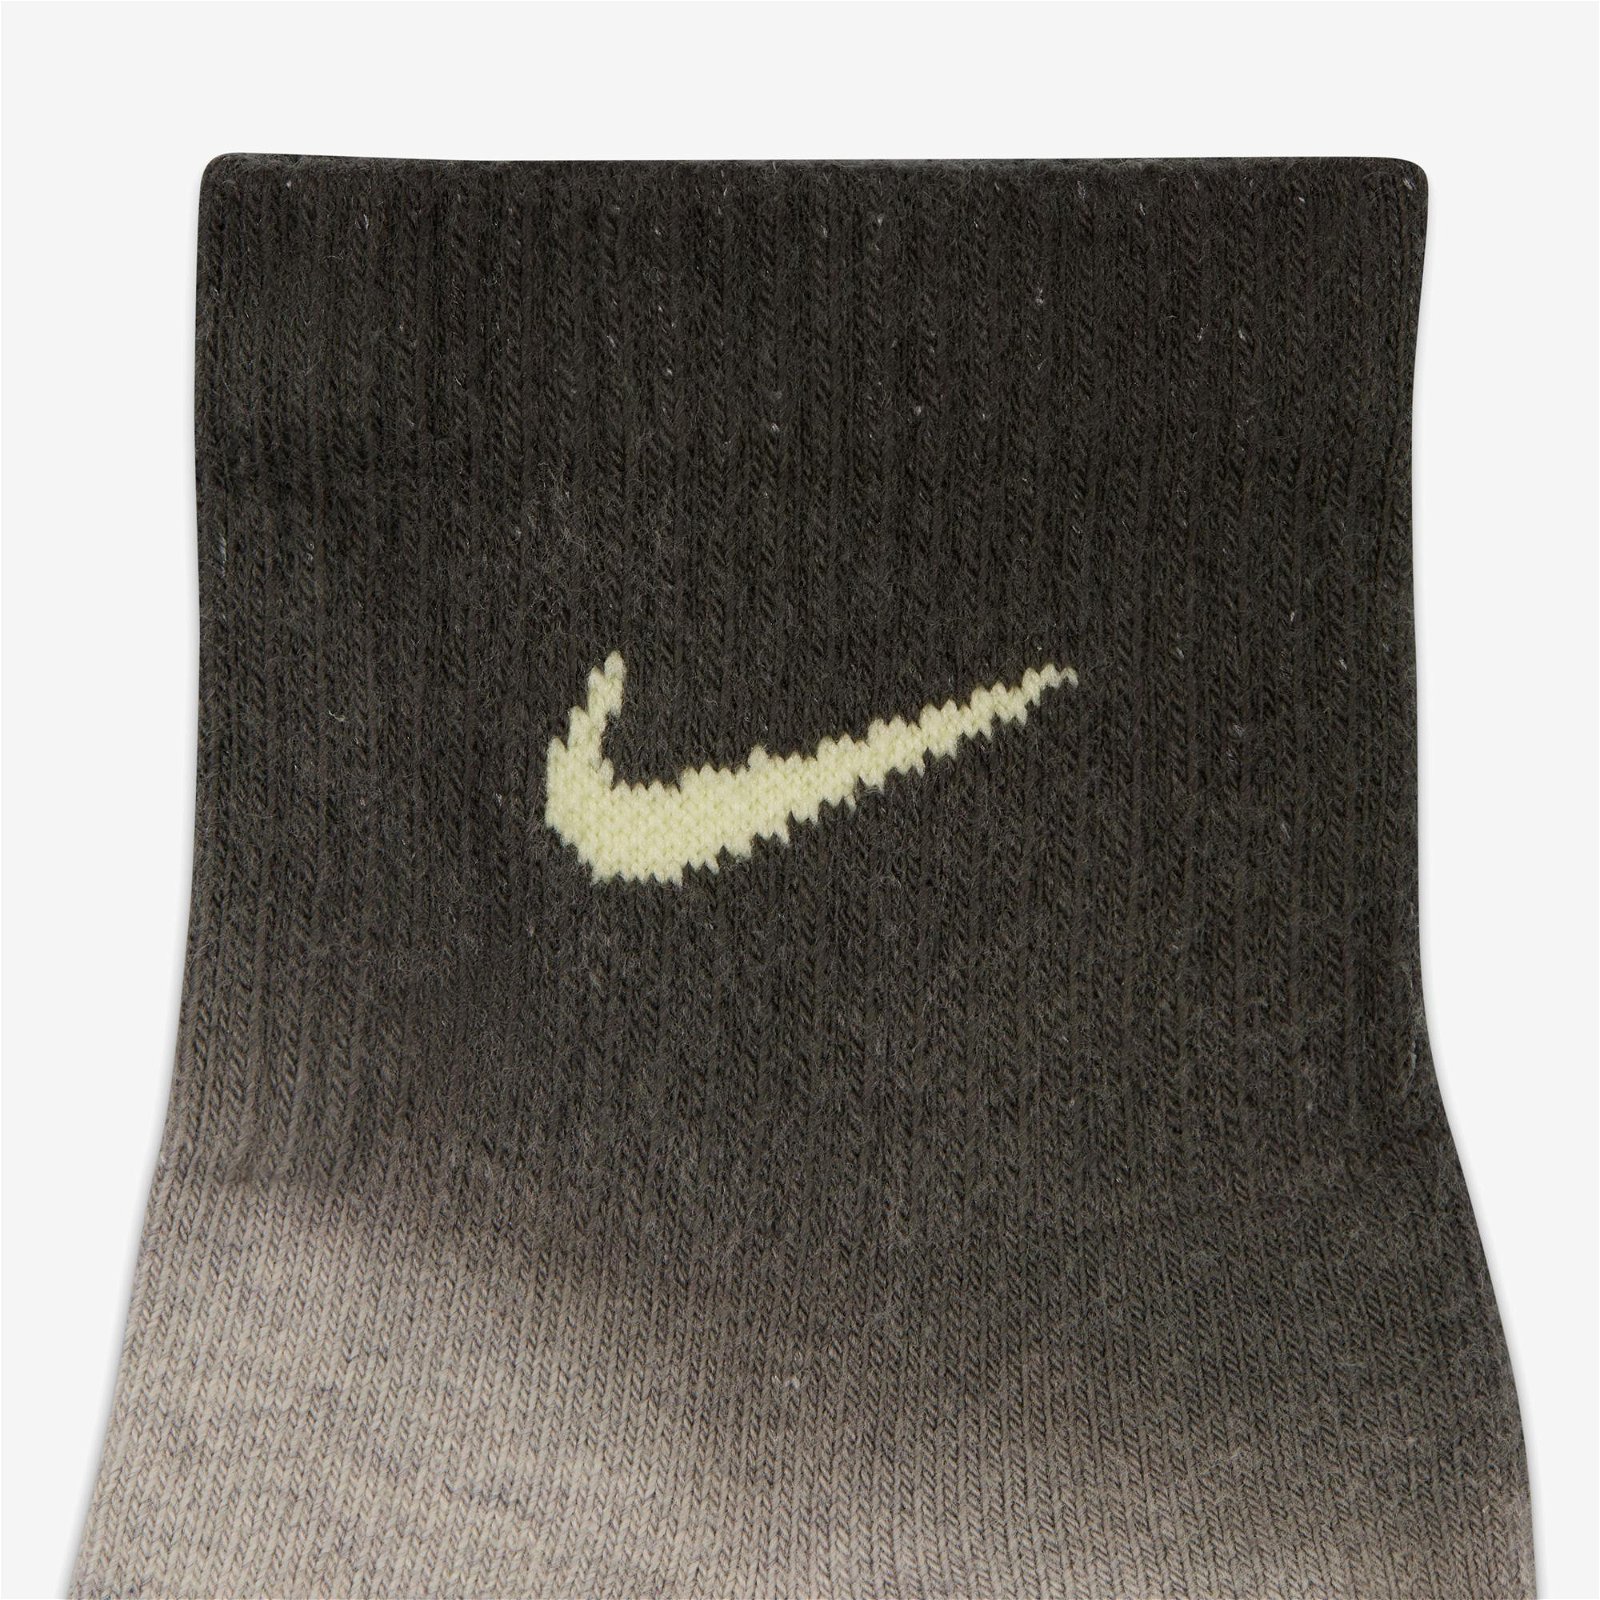 Nike Everyday Plus Cushioned Unisex Renkli Çorap